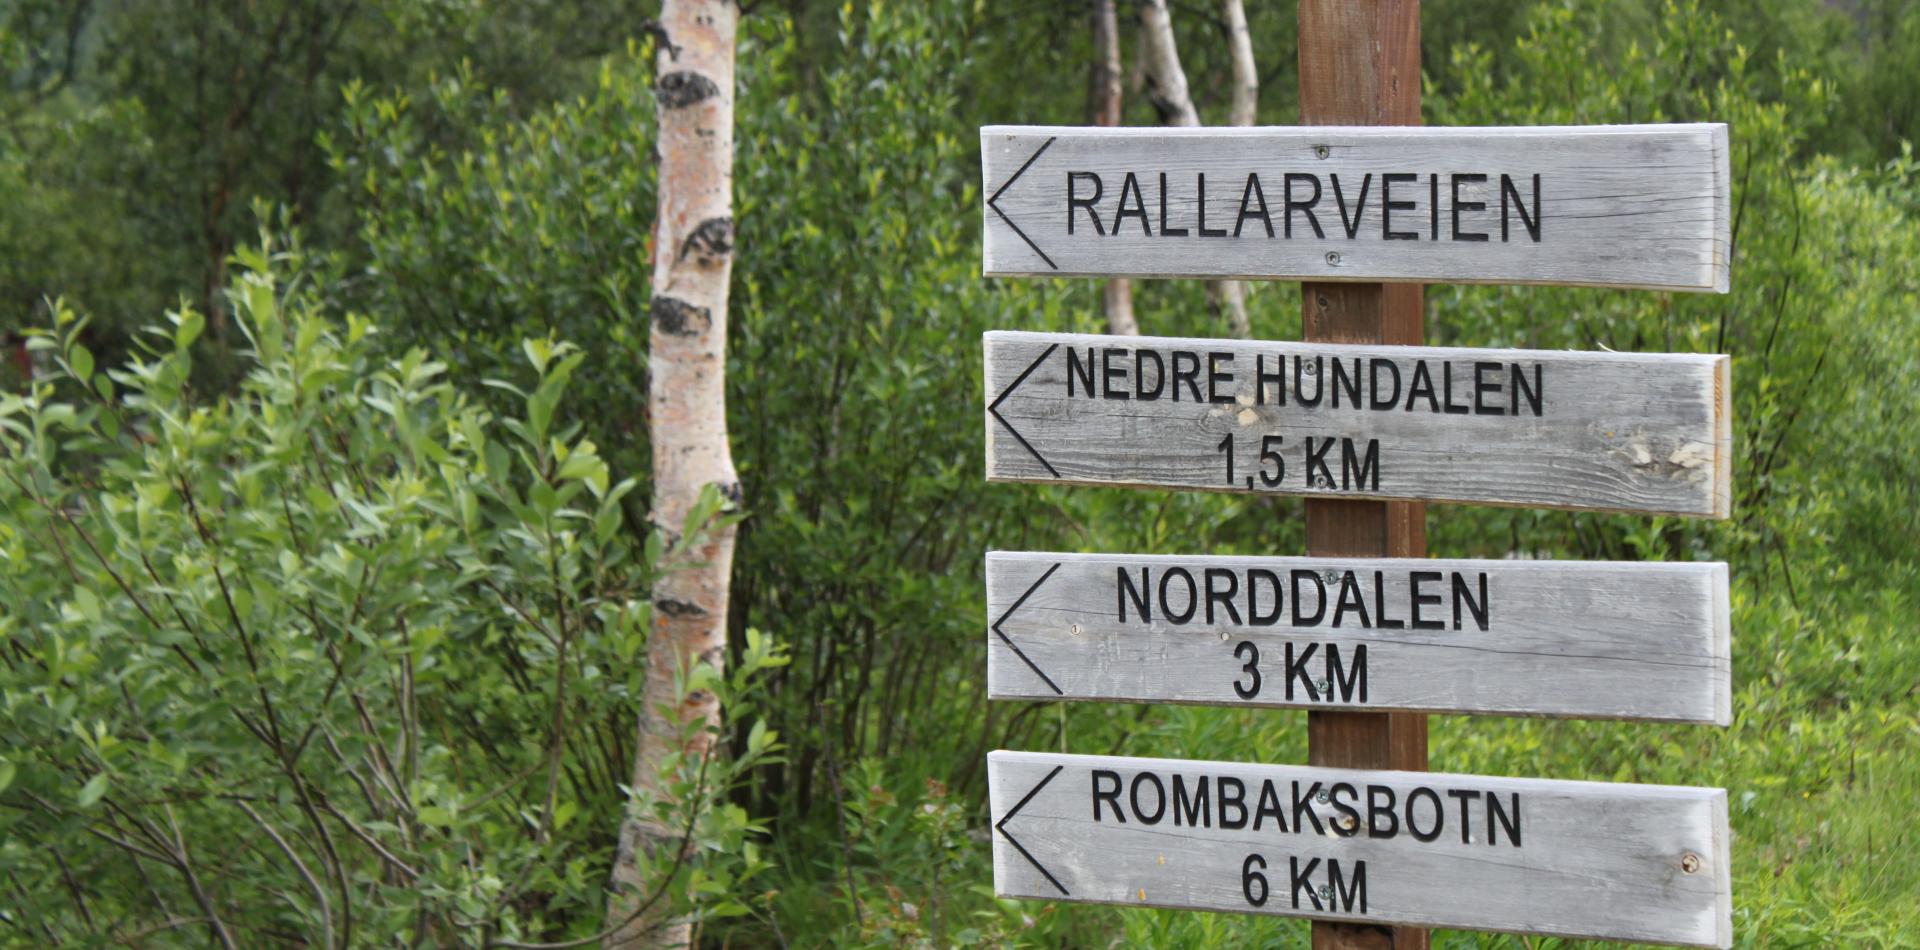 Hiking at Rallarveien